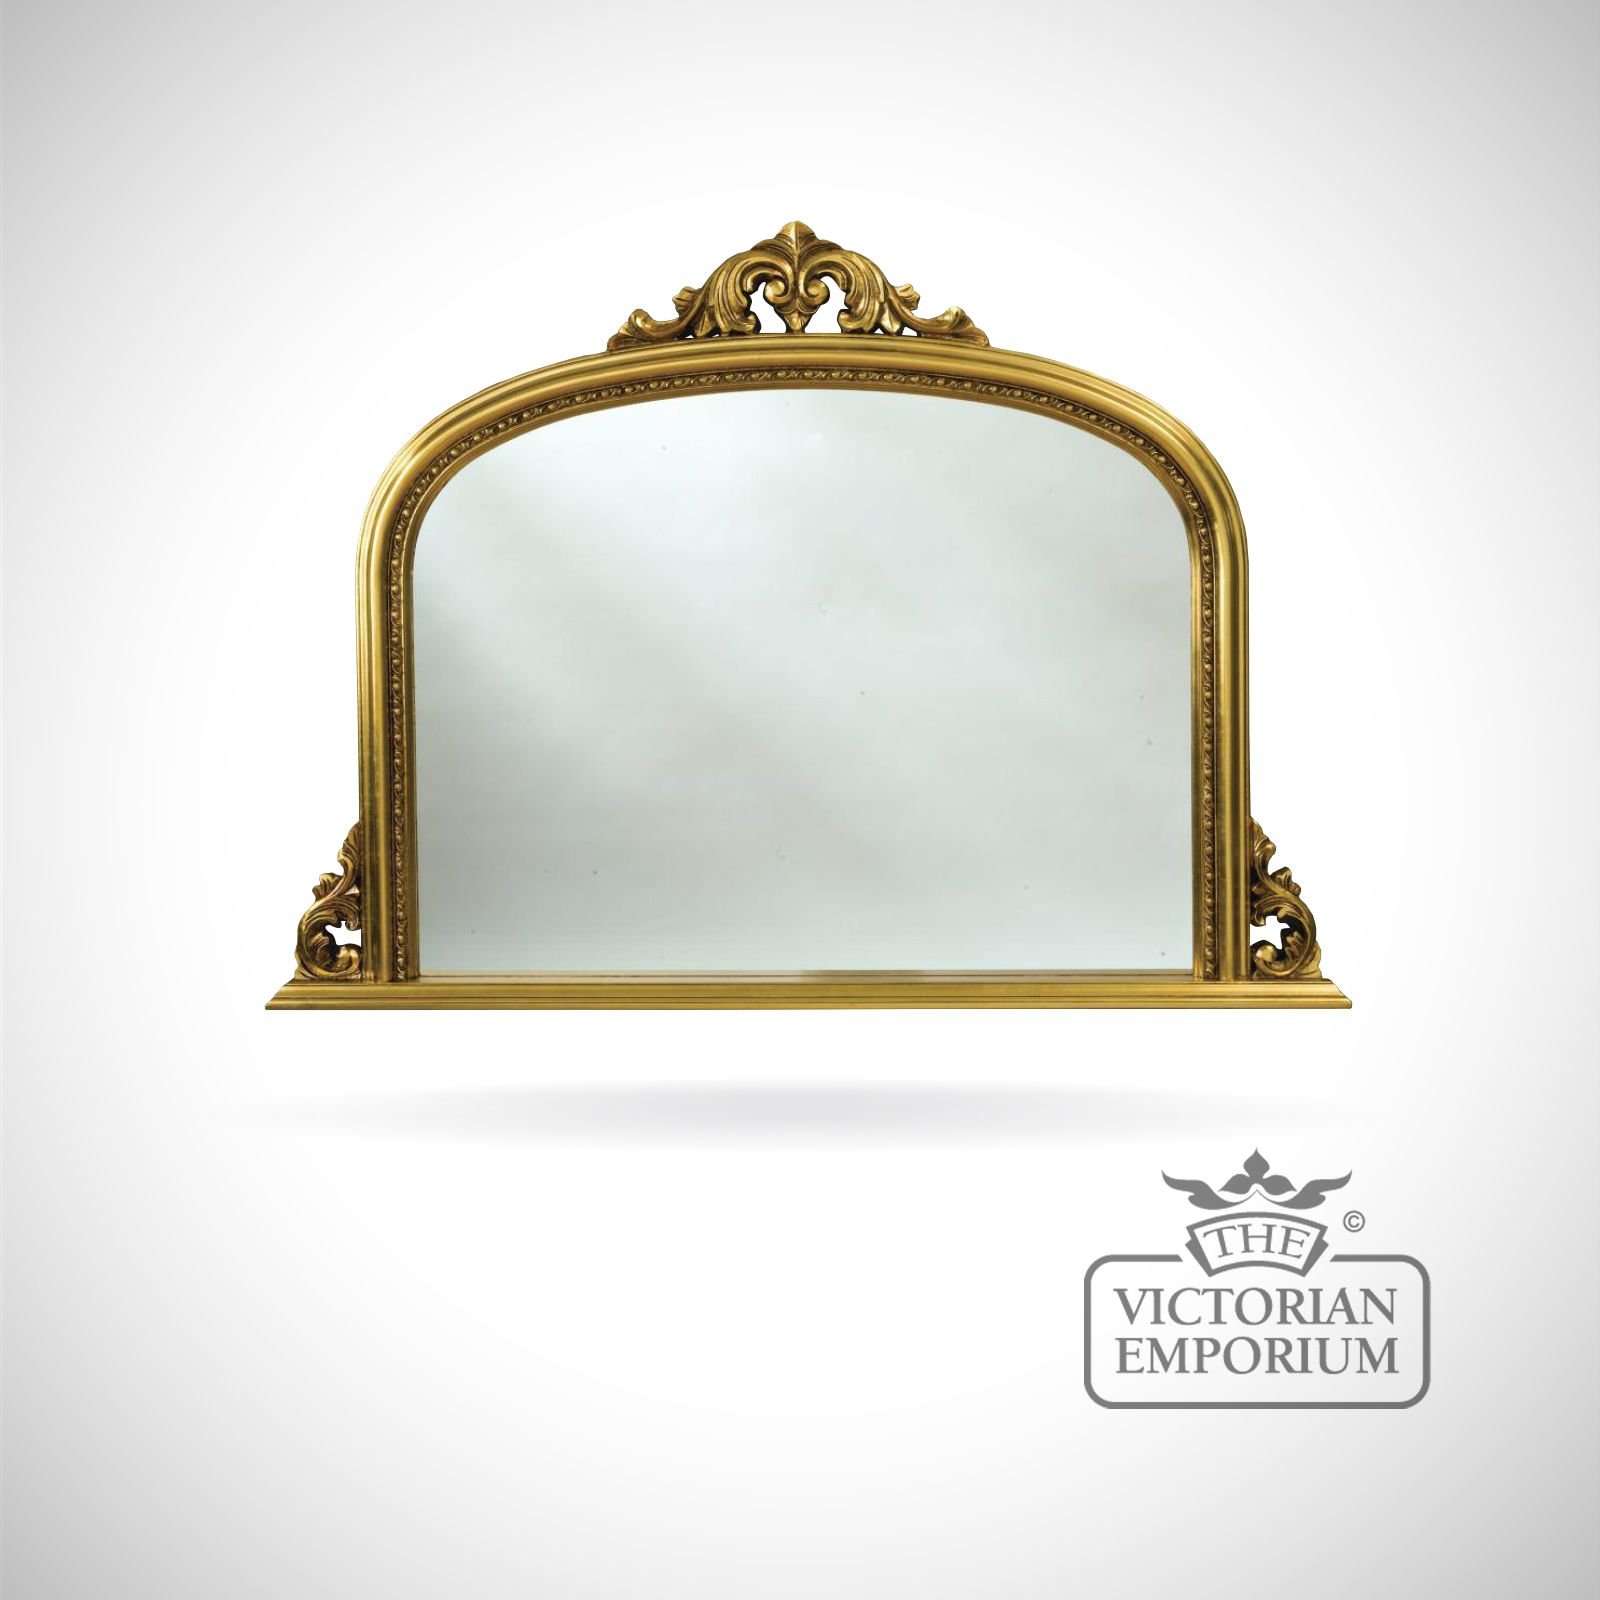 Carlisle Mirror with decorative gold frame - 127x91cm